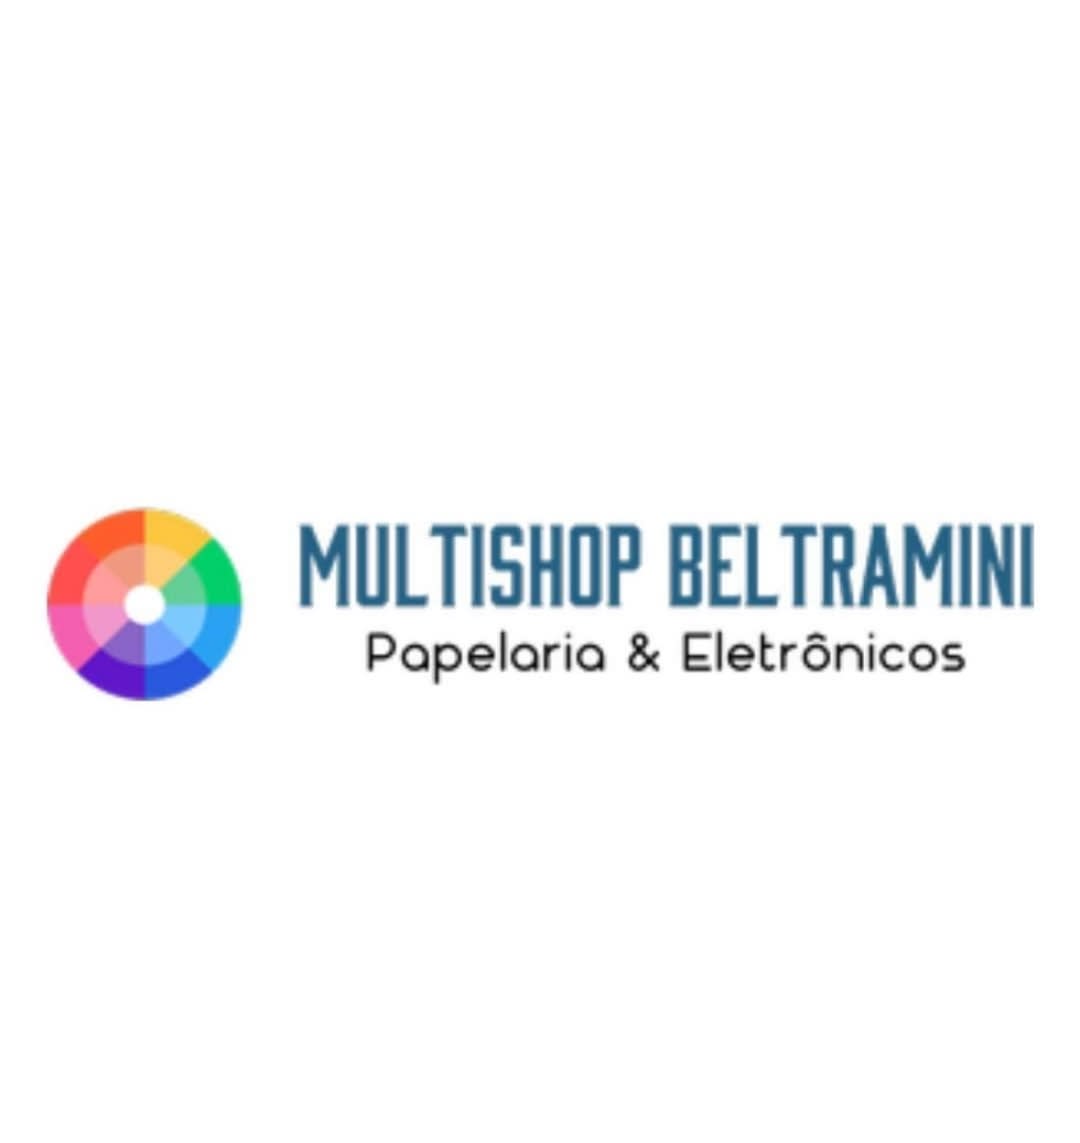 Multishop Beltramini